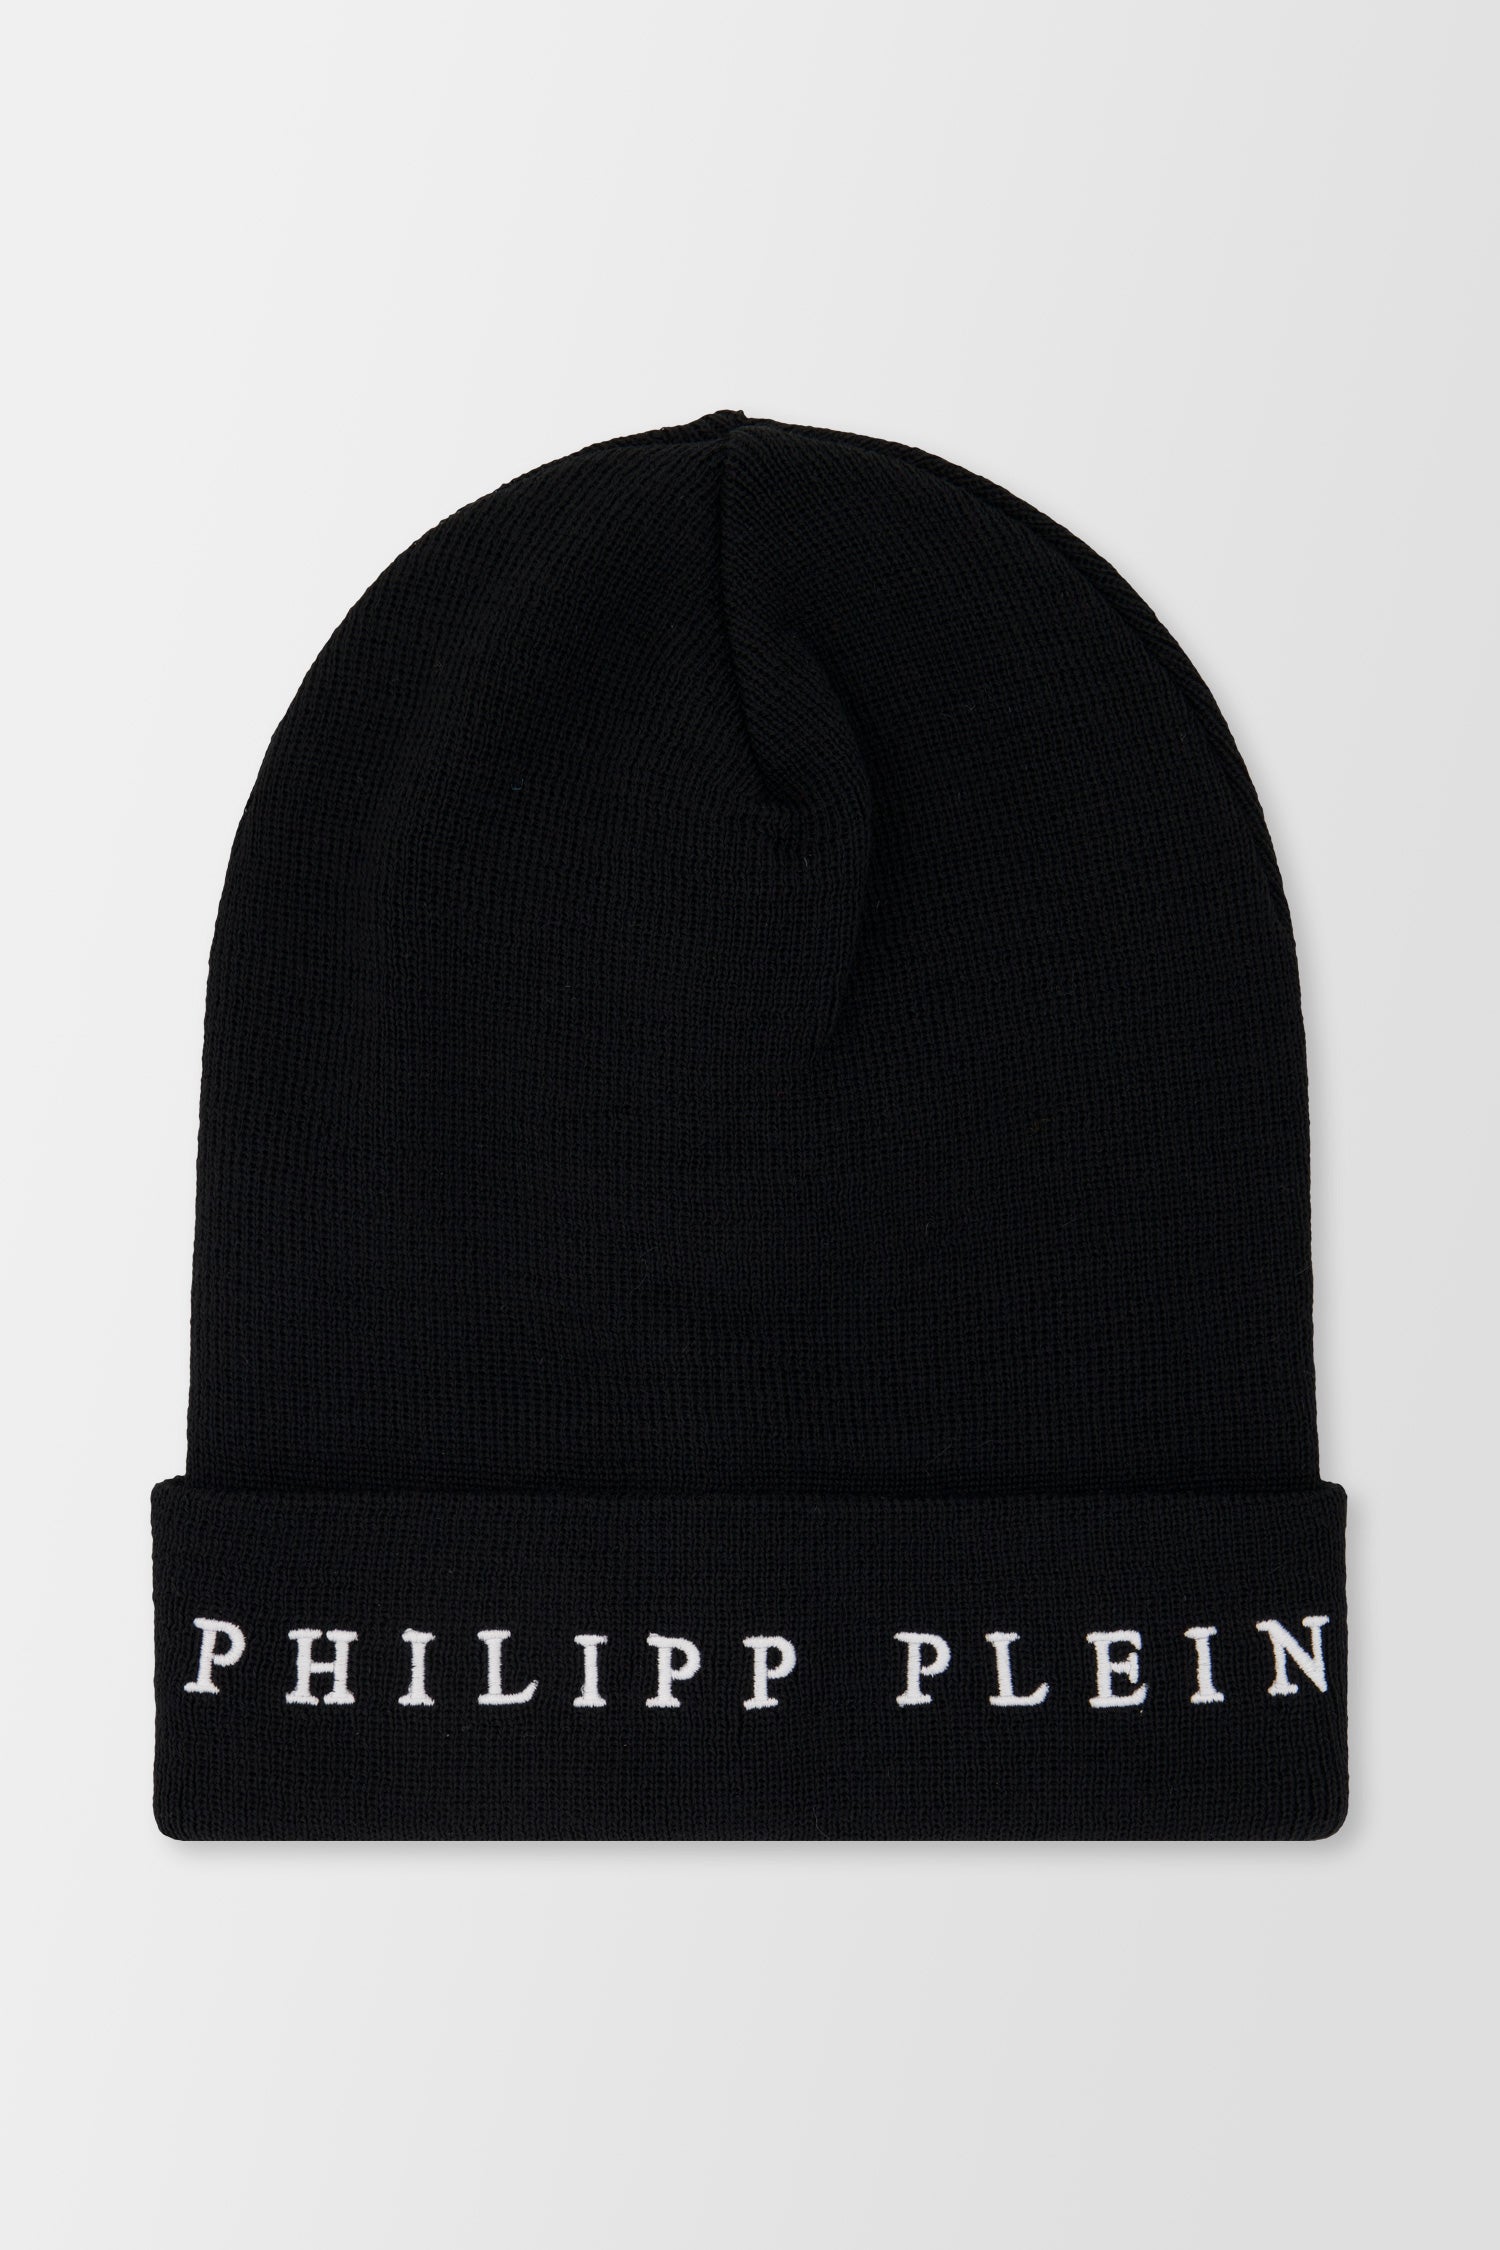 Philipp Plein Black Hat